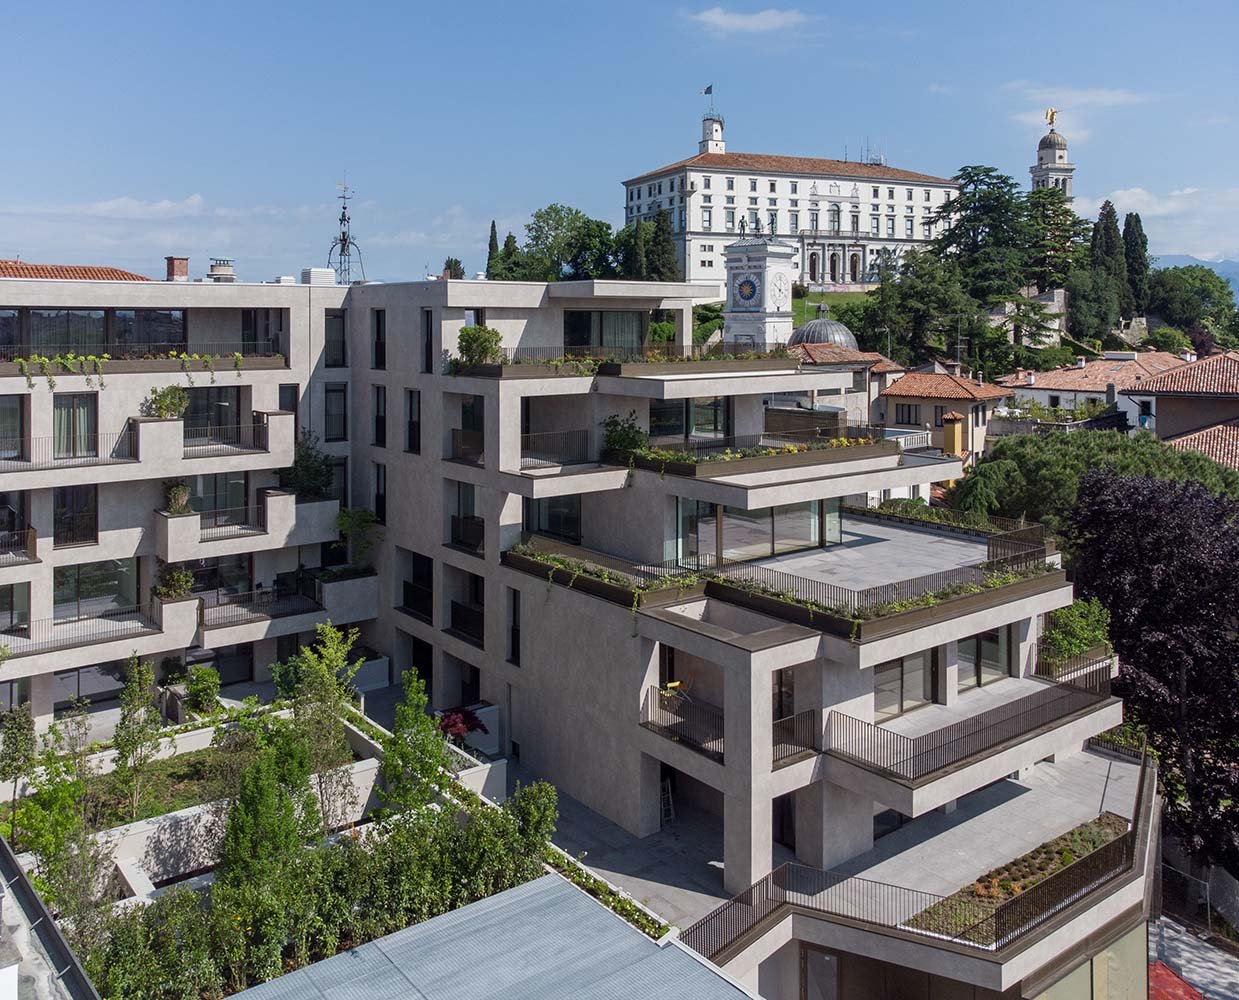 Palazzo Eden, an urban regeneration in Udine